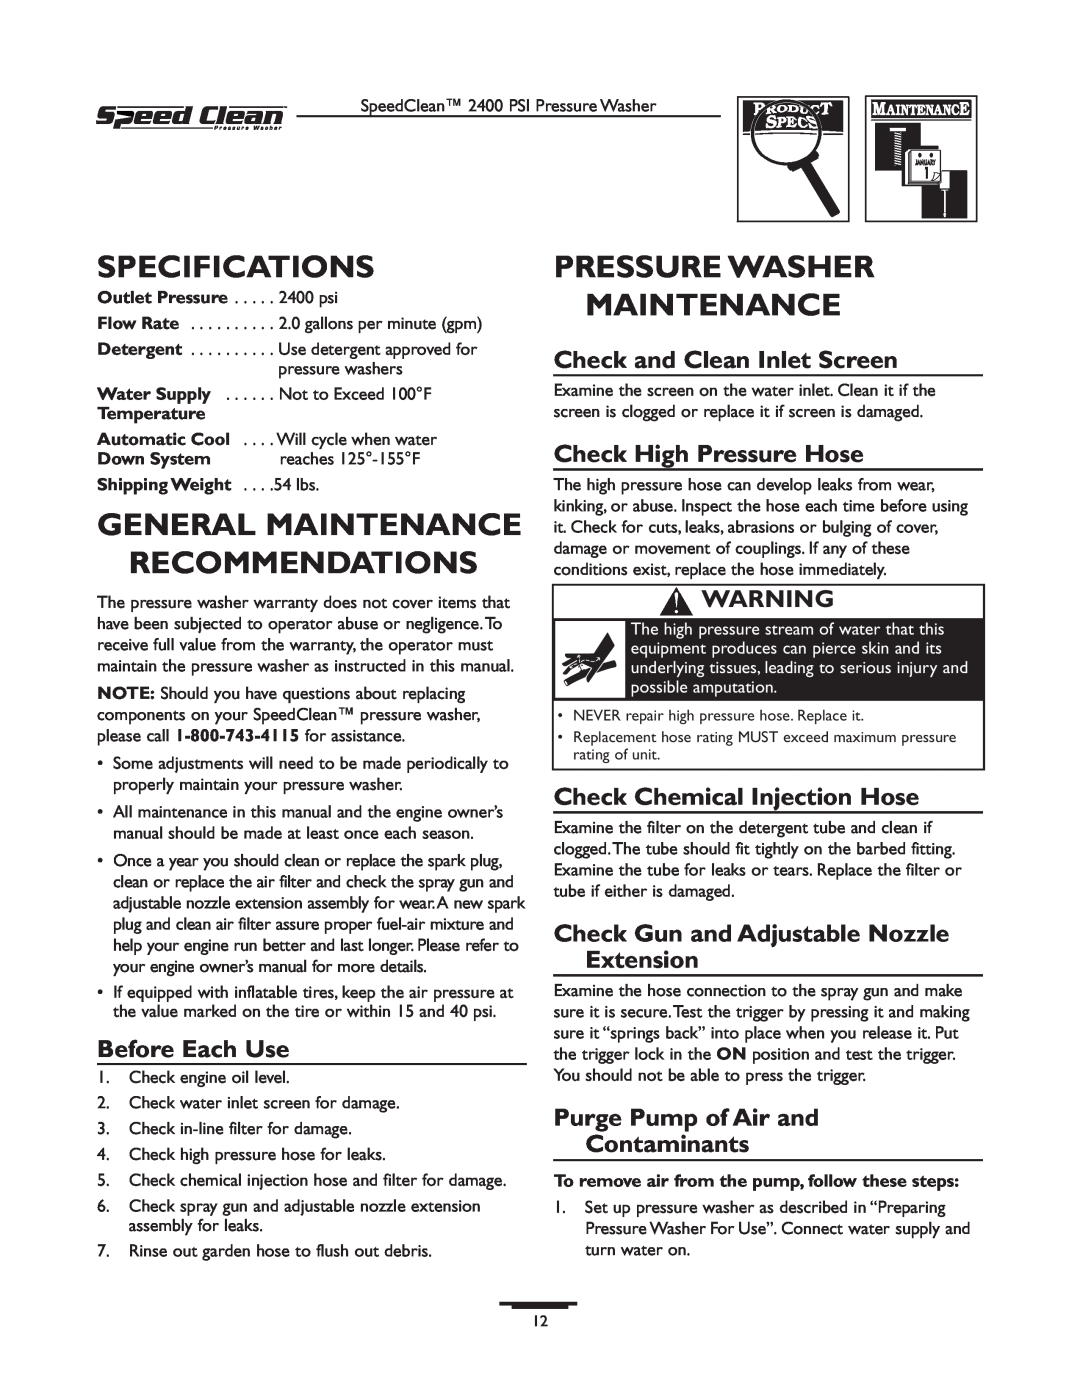 Briggs & Stratton 020227-0 Specifications, General Maintenance Recommendations, Pressure Washer Maintenance, Temperature 